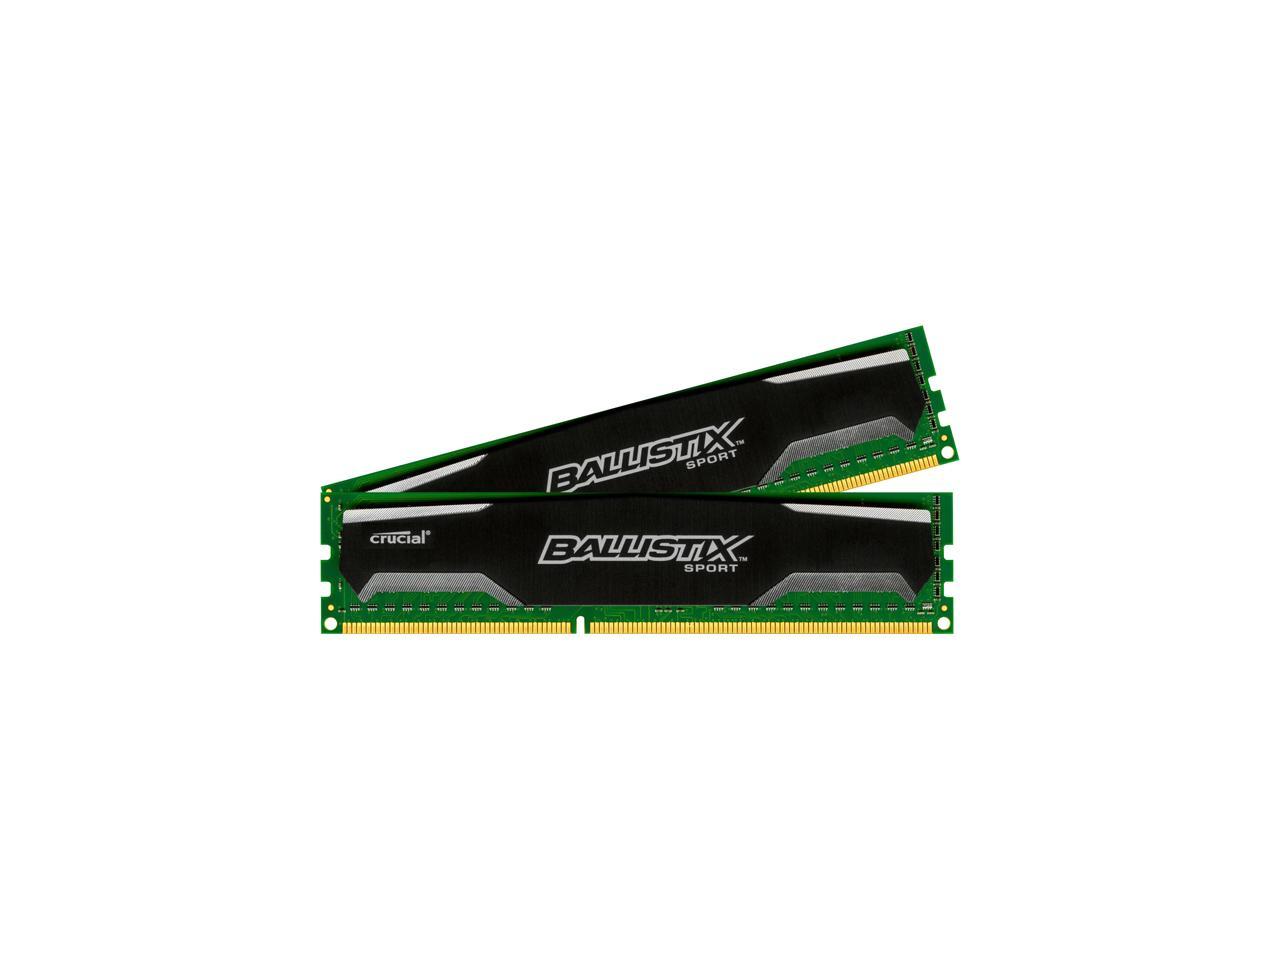 Crucial 16GB (2 x 8GB) 240-Pin DDR3 SDRAM DDR3 1600 (PC3 12800) Ballistix Memory Model BLS2CP8G3D1609DS1S00CEU